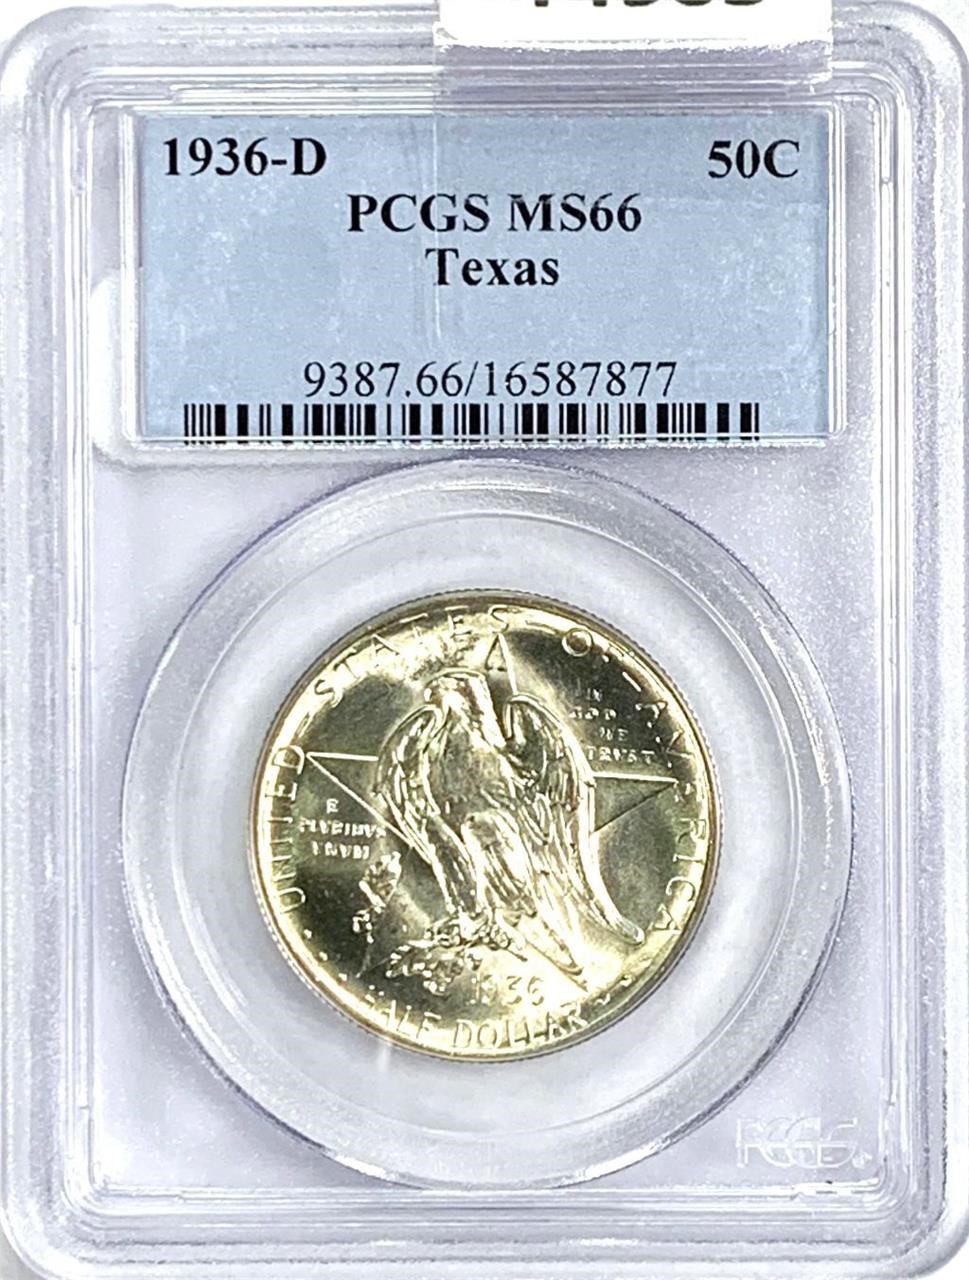 Premium Gold & Silver / Coins & Bullion Auction!  02/28